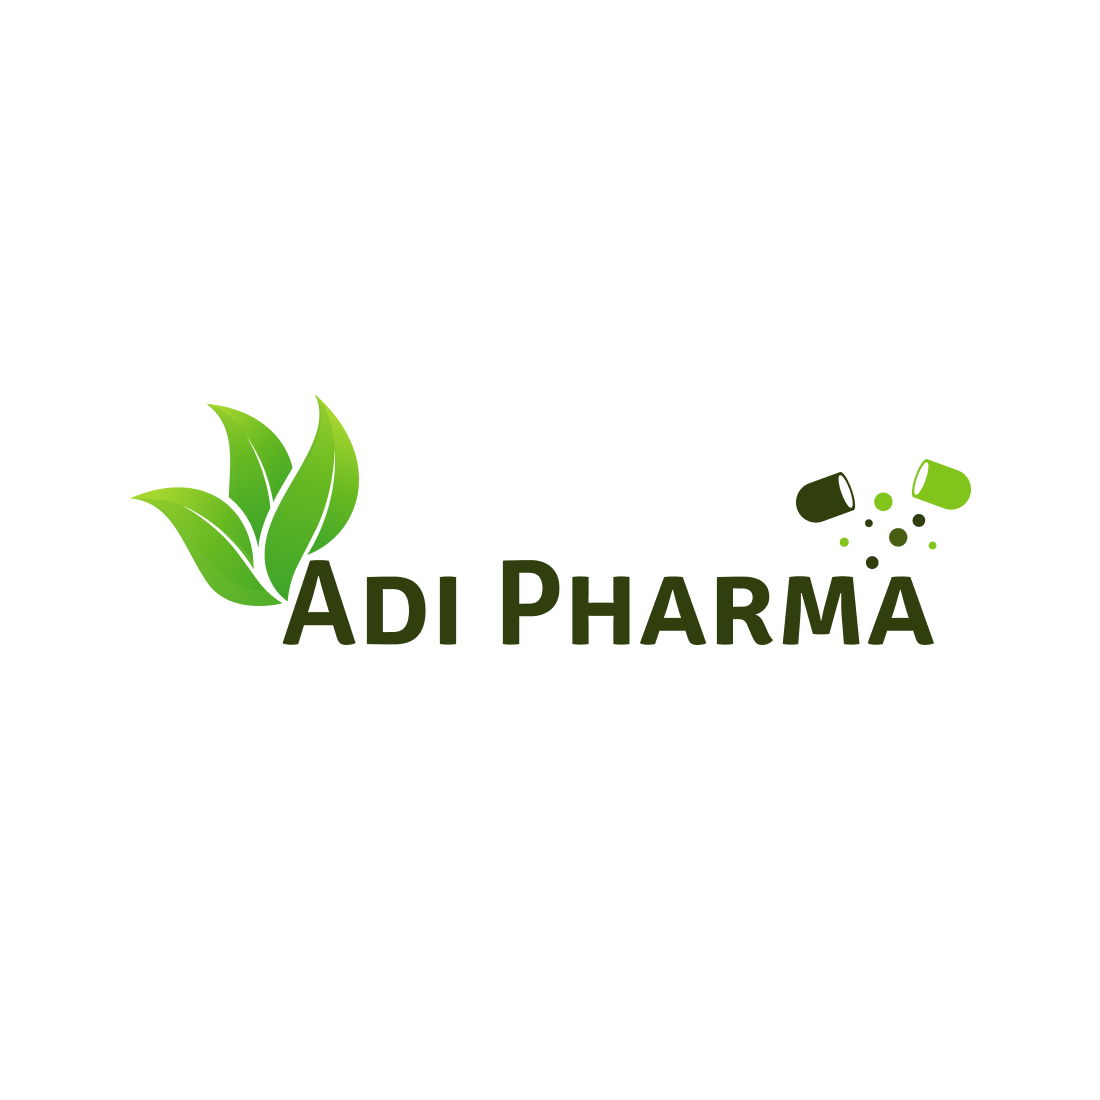 Adi Pharma Logo for 11$ cover image.